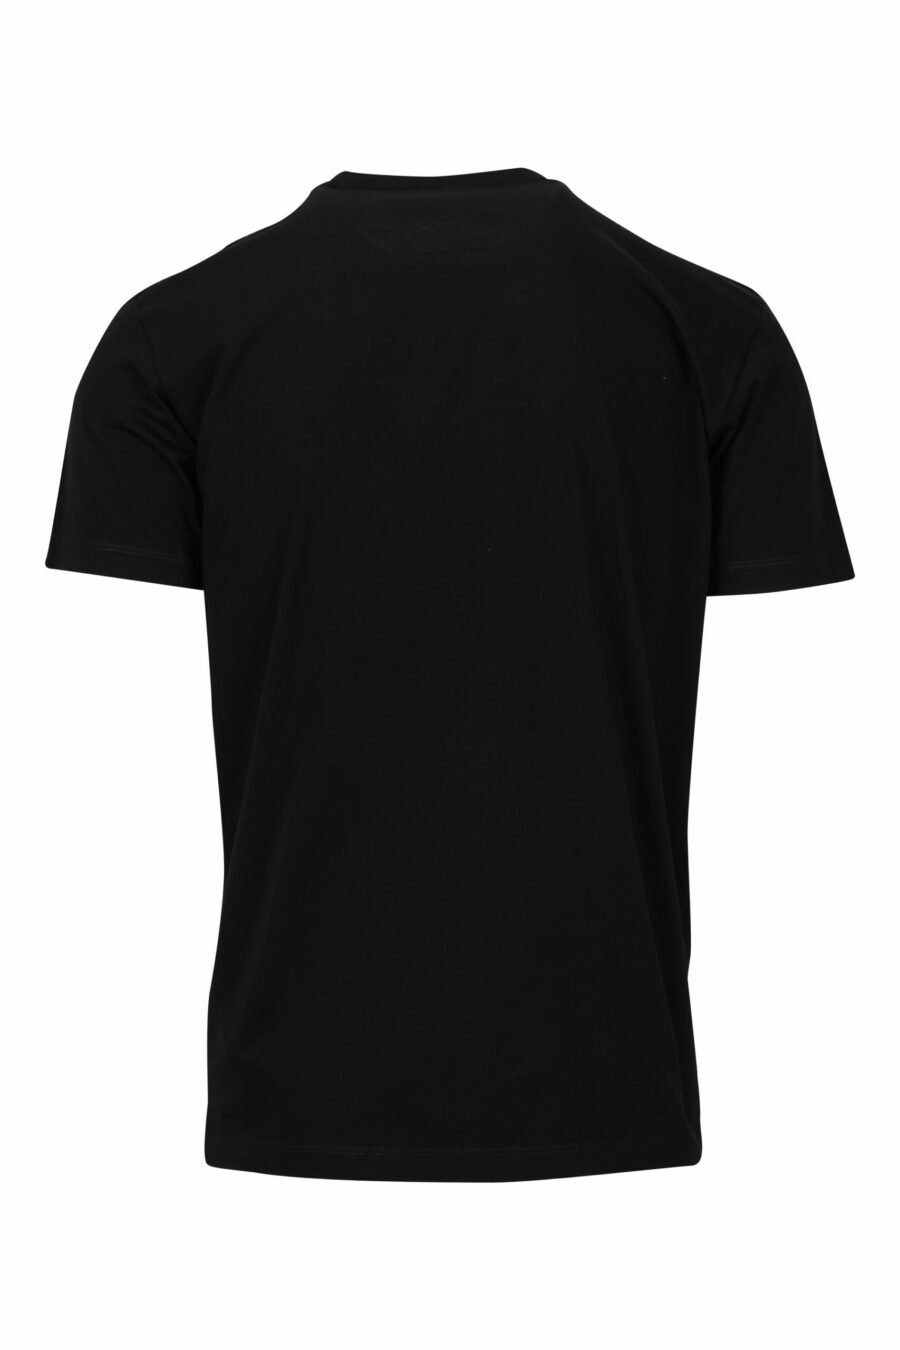 Camiseta negra con logo clasico en blanco - 8054148159870 1 scaled